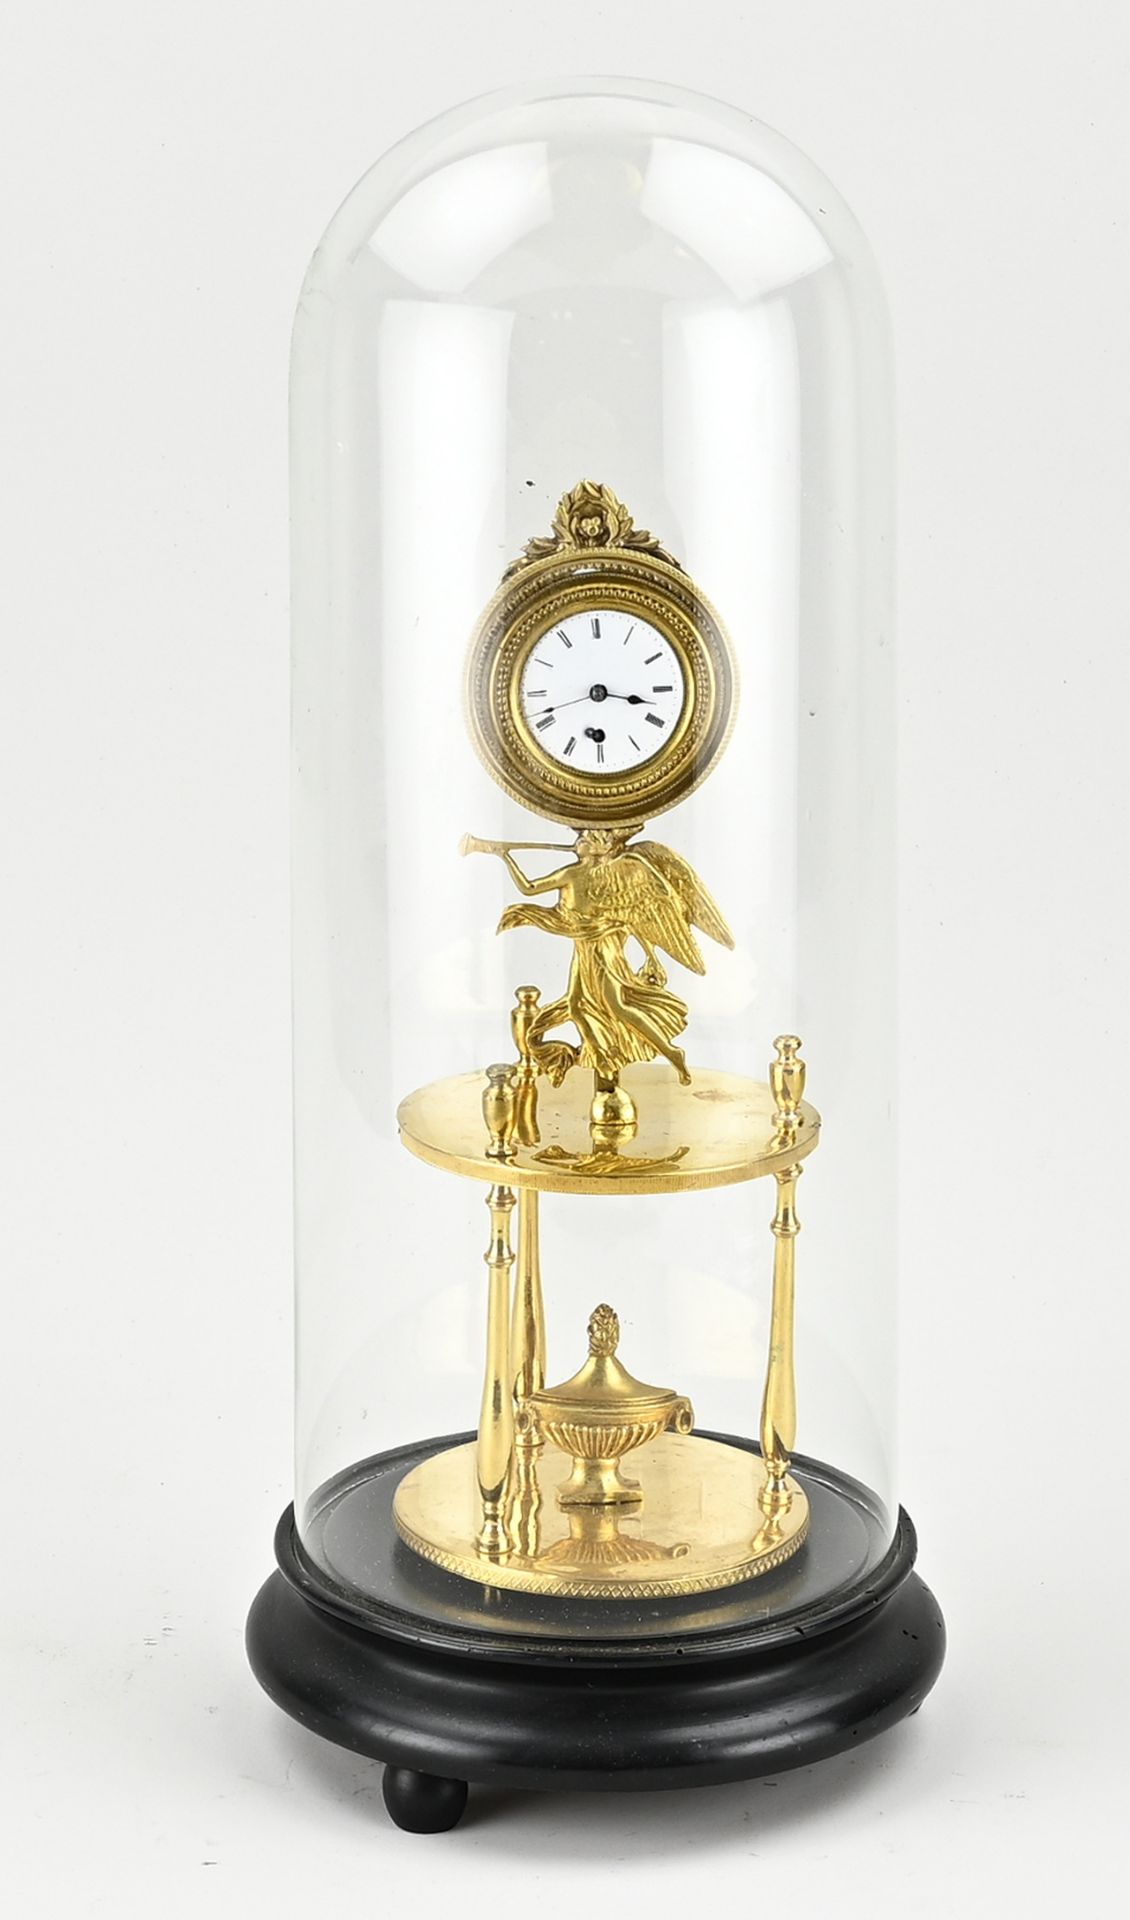 Louis Seize mantel clock under dome - Image 2 of 2